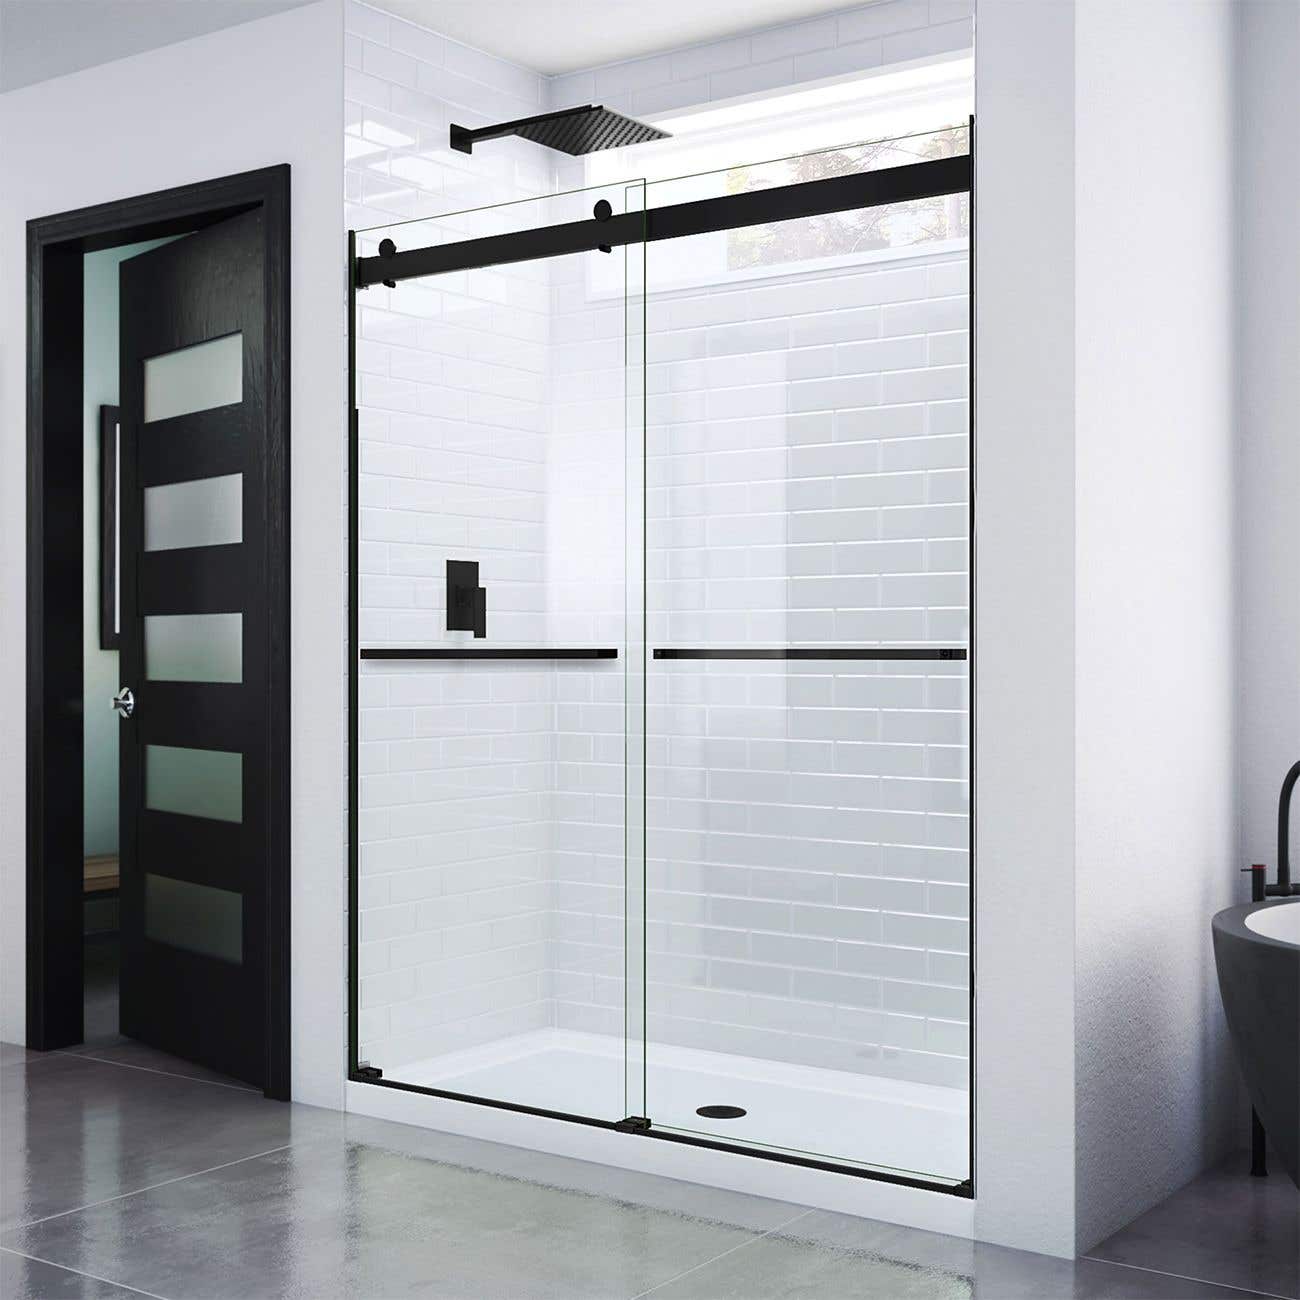 Essence 56-60 Inch W x 76 Inch H Frameless Bypass Shower Door in Satin Black